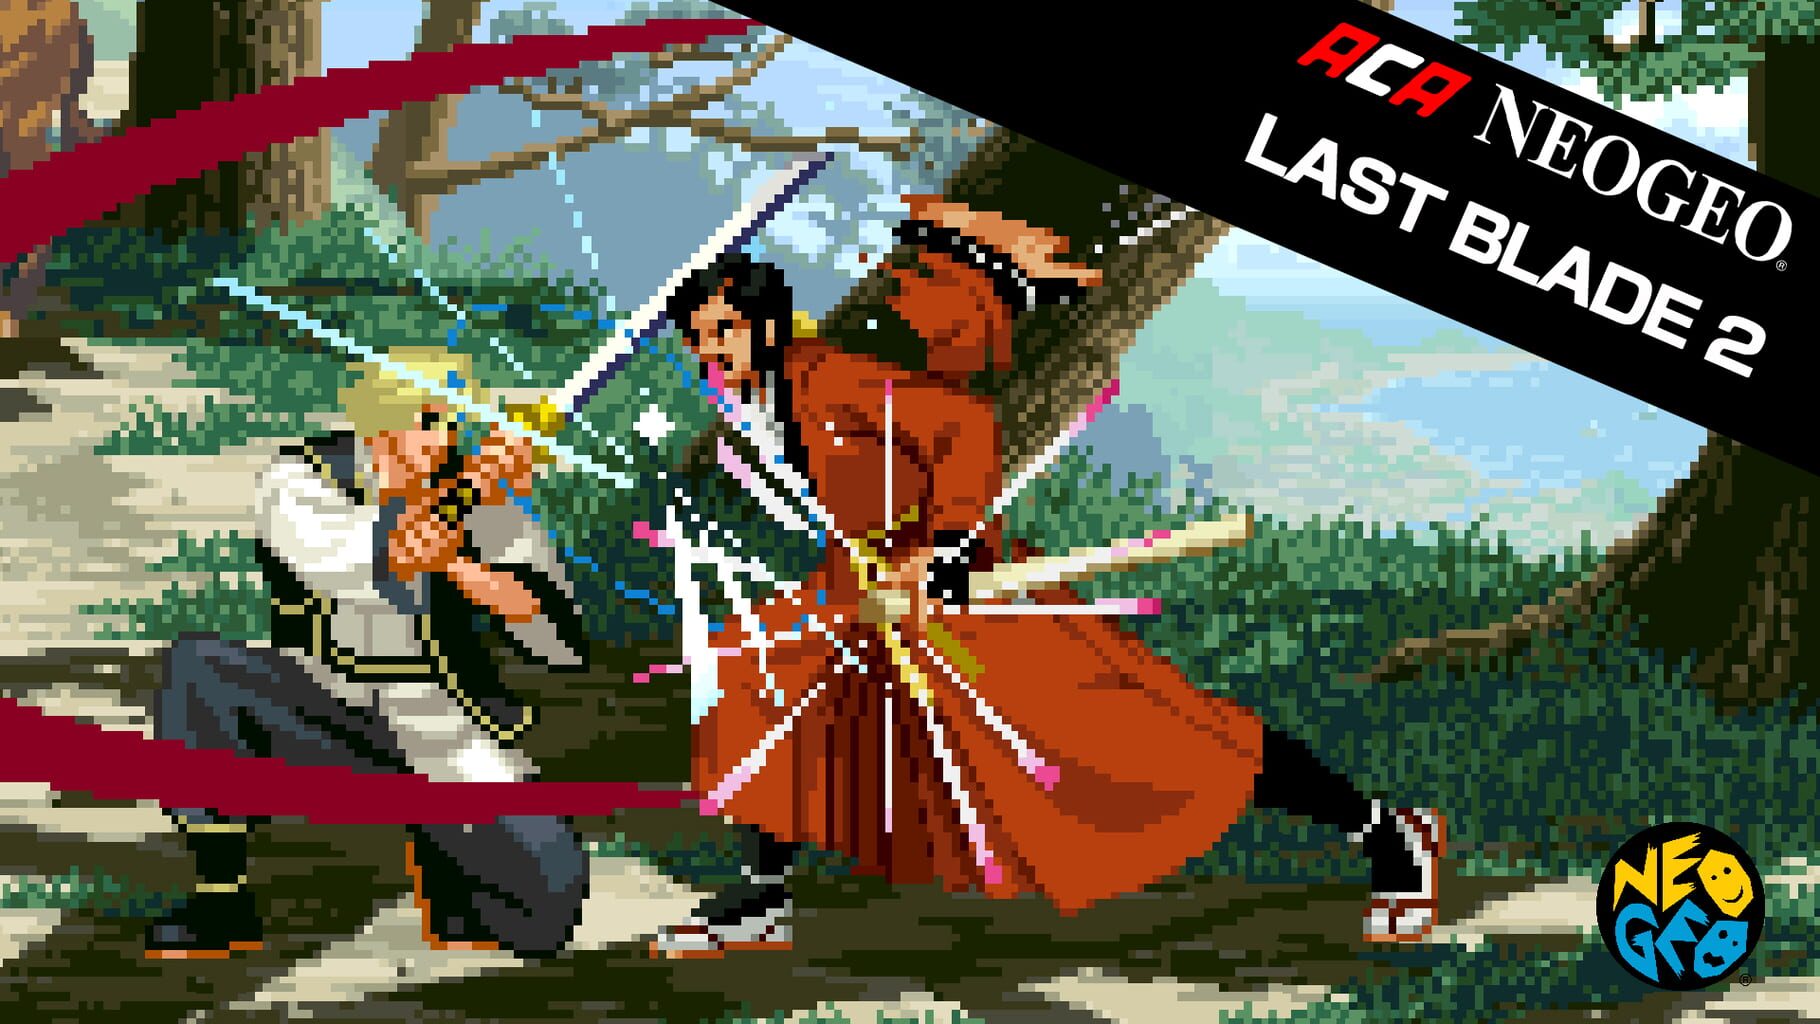 ACA Neo Geo: The Last Blade 2 artwork